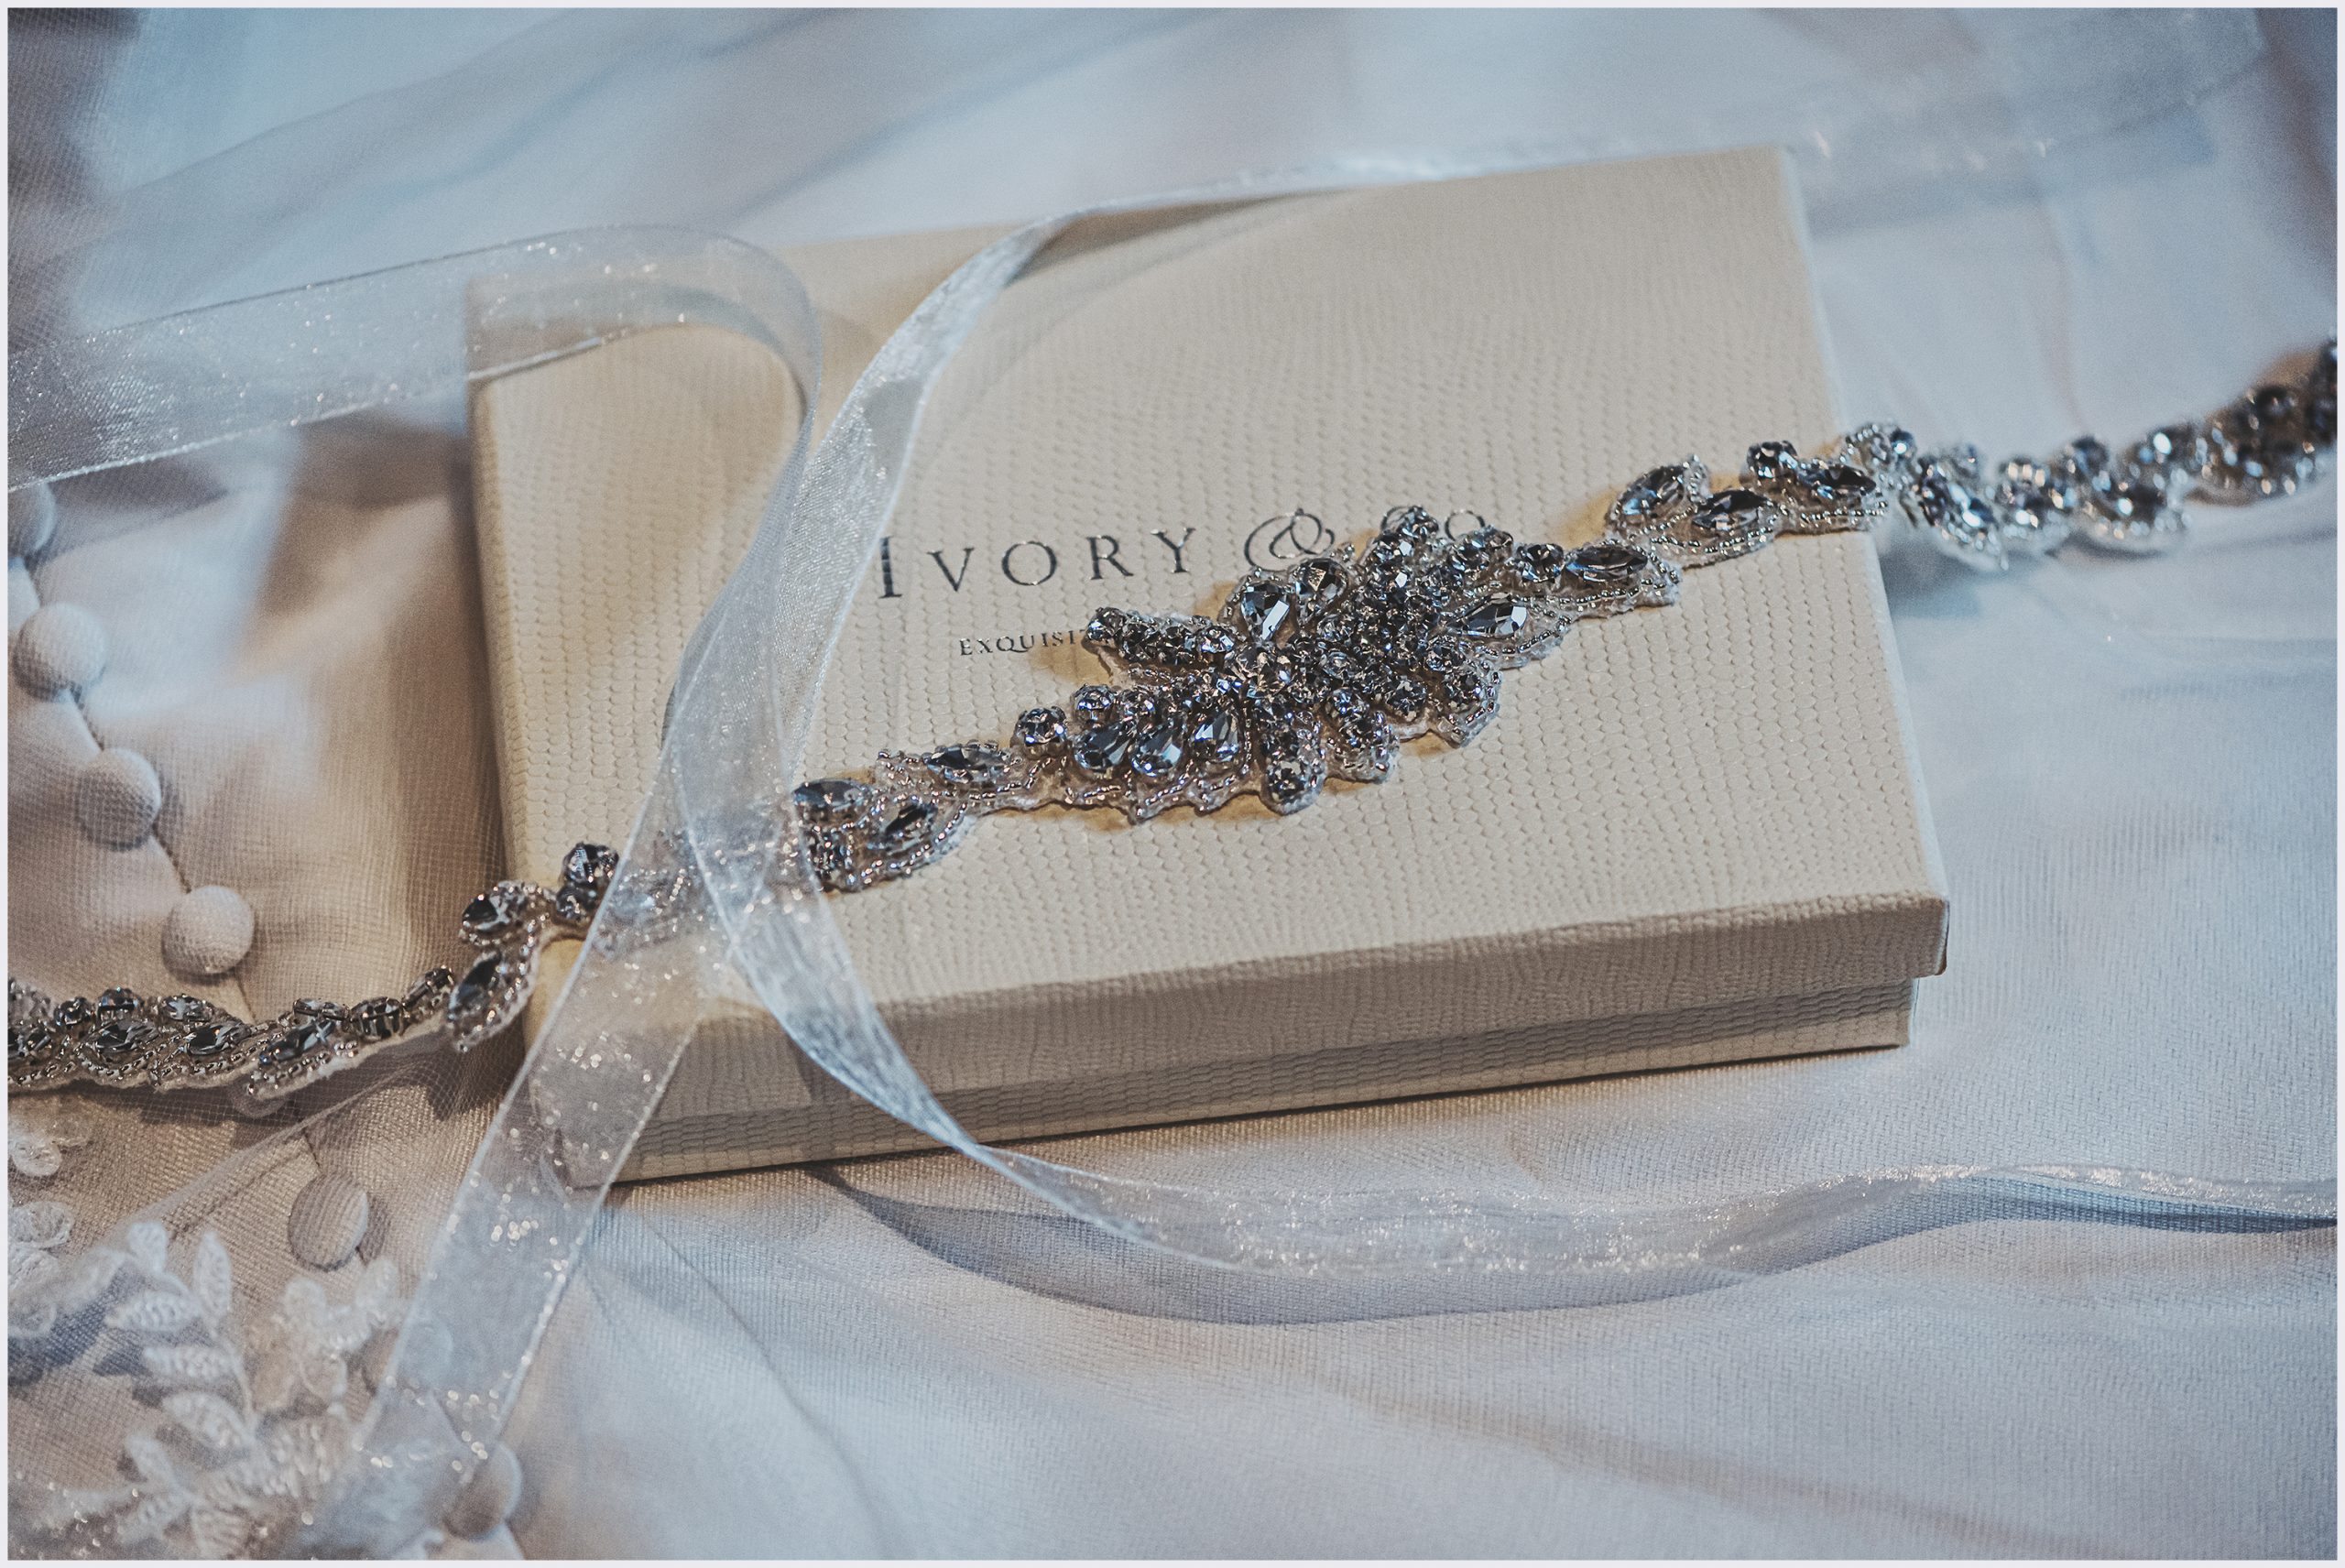 A bride's diamanté wedding dress belt rests on the box surrounded by ribbon.